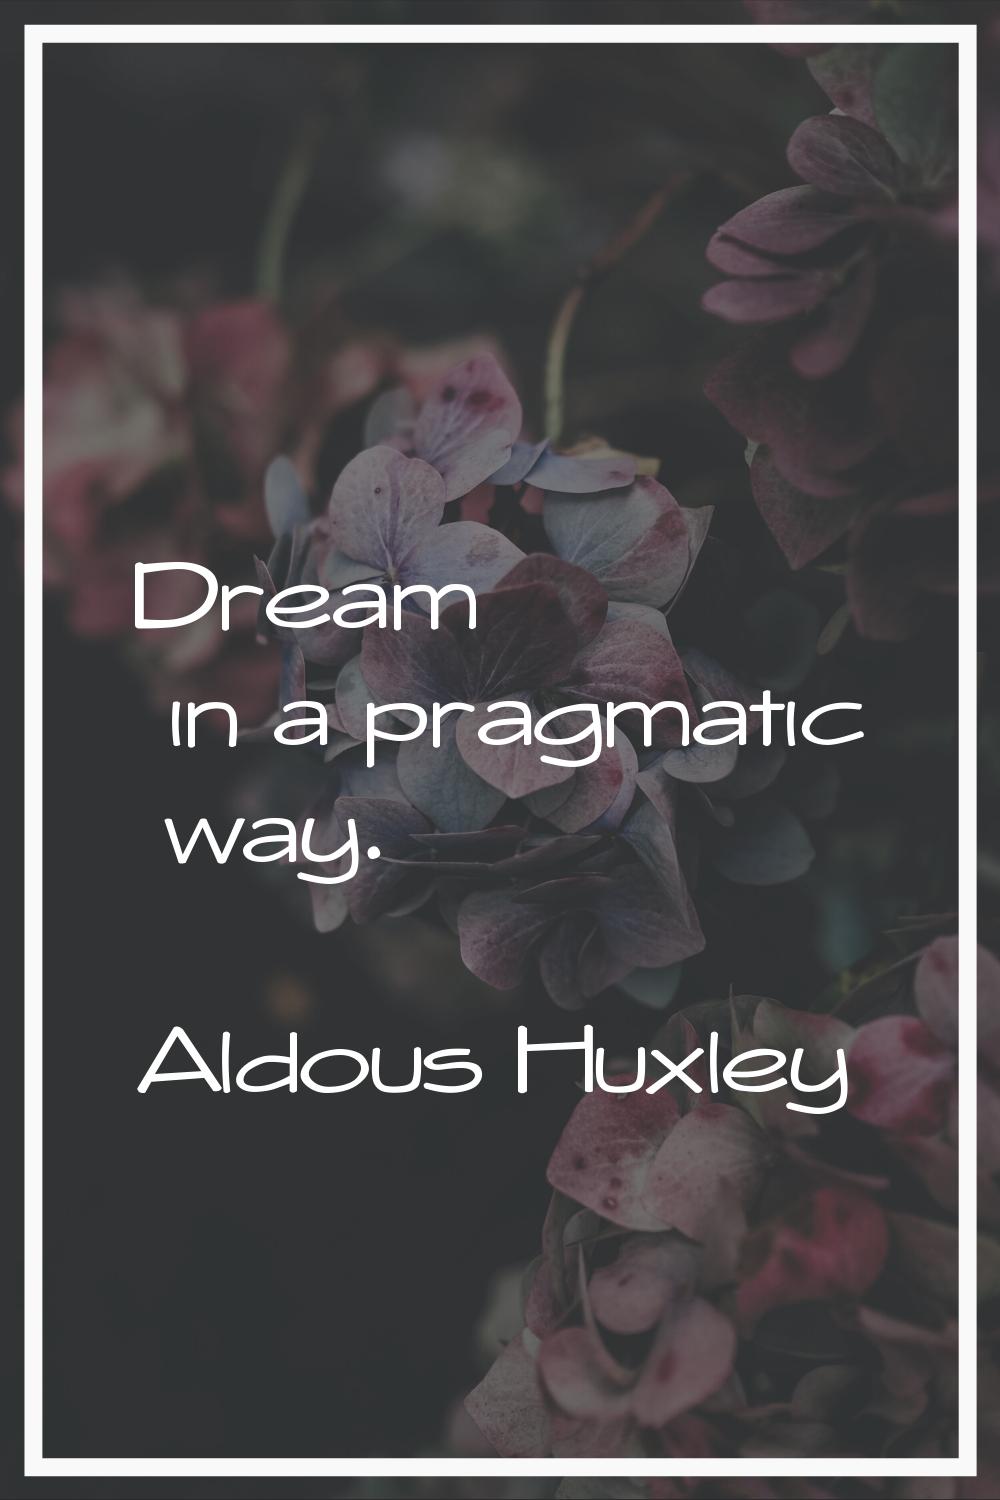 Dream in a pragmatic way.